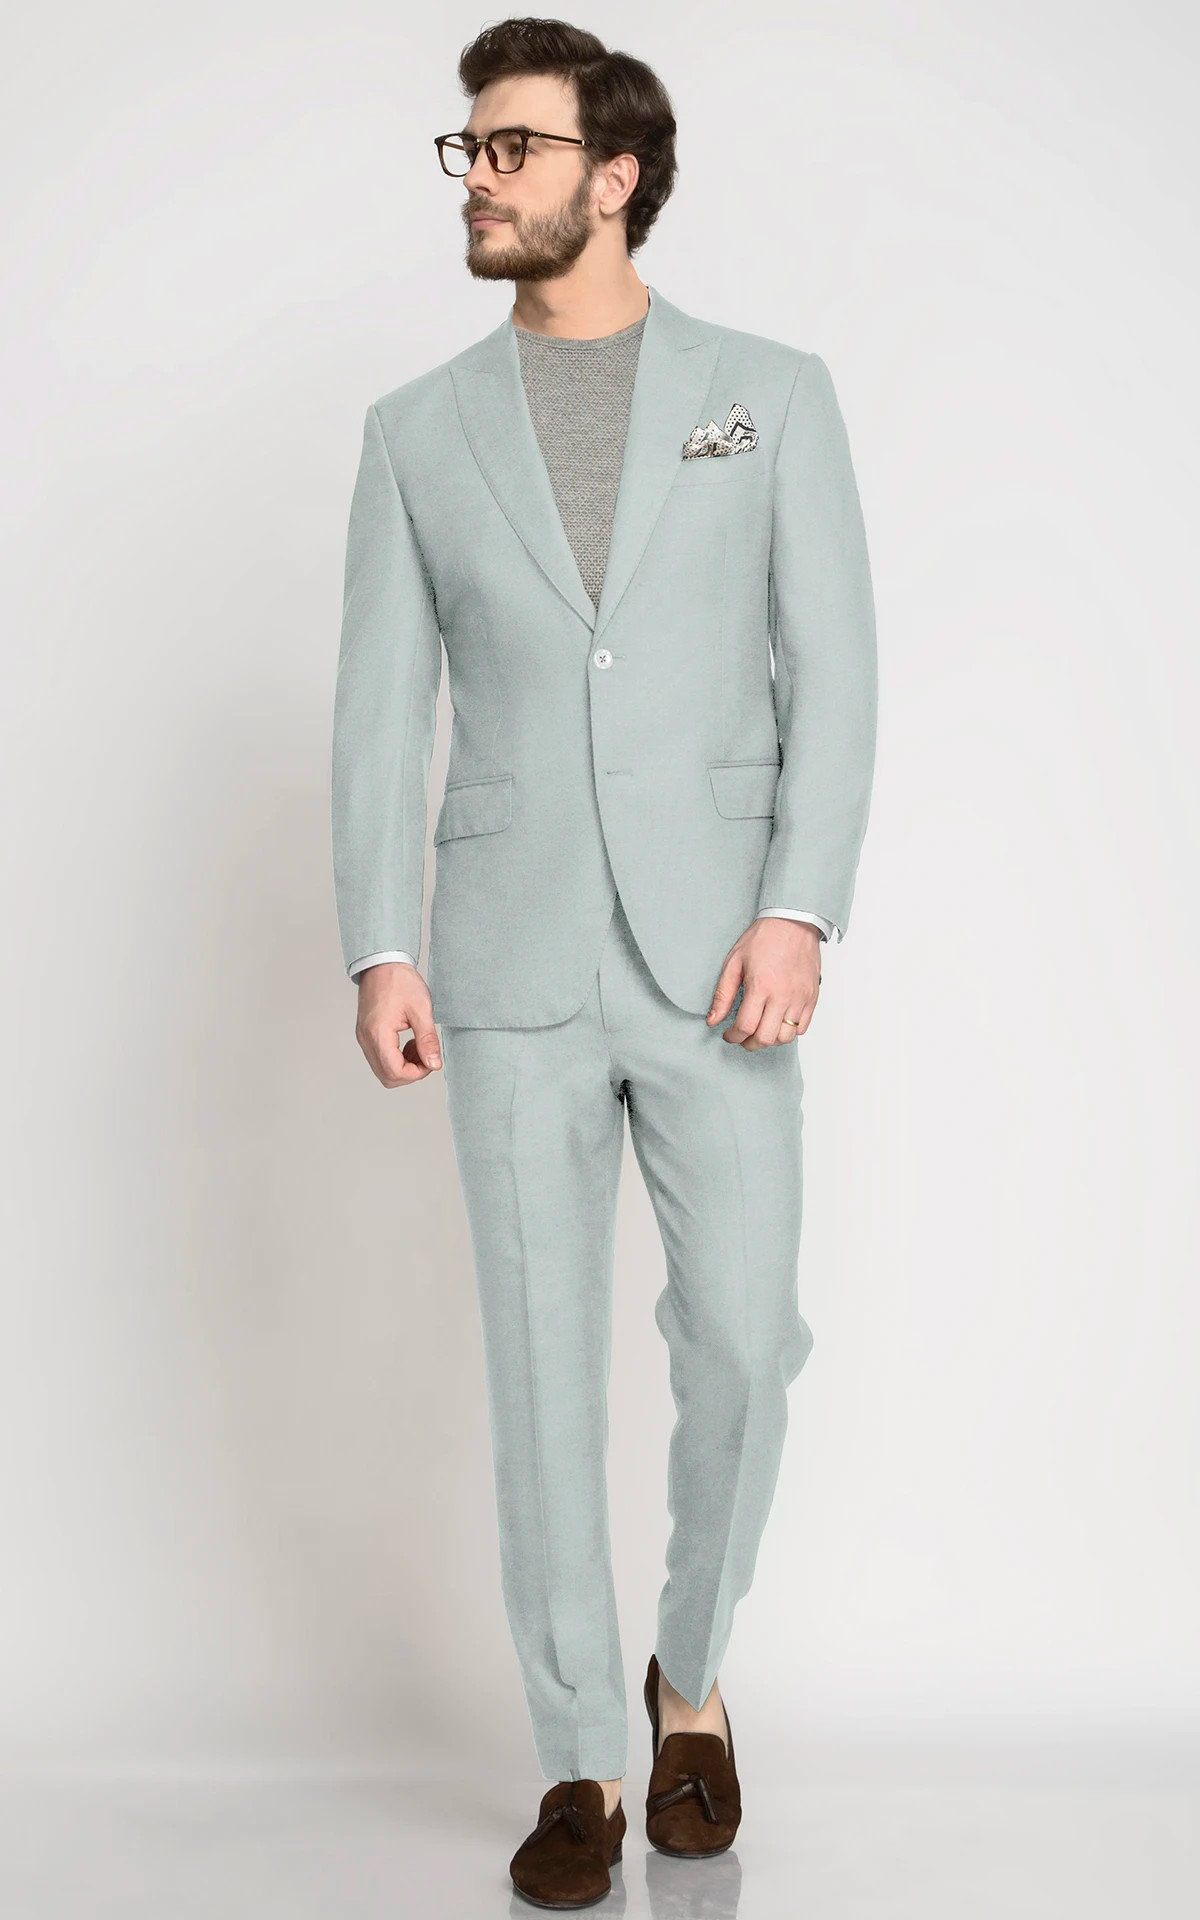 10 Pastel Suit Trends Men Should Definitely Copy In 2019